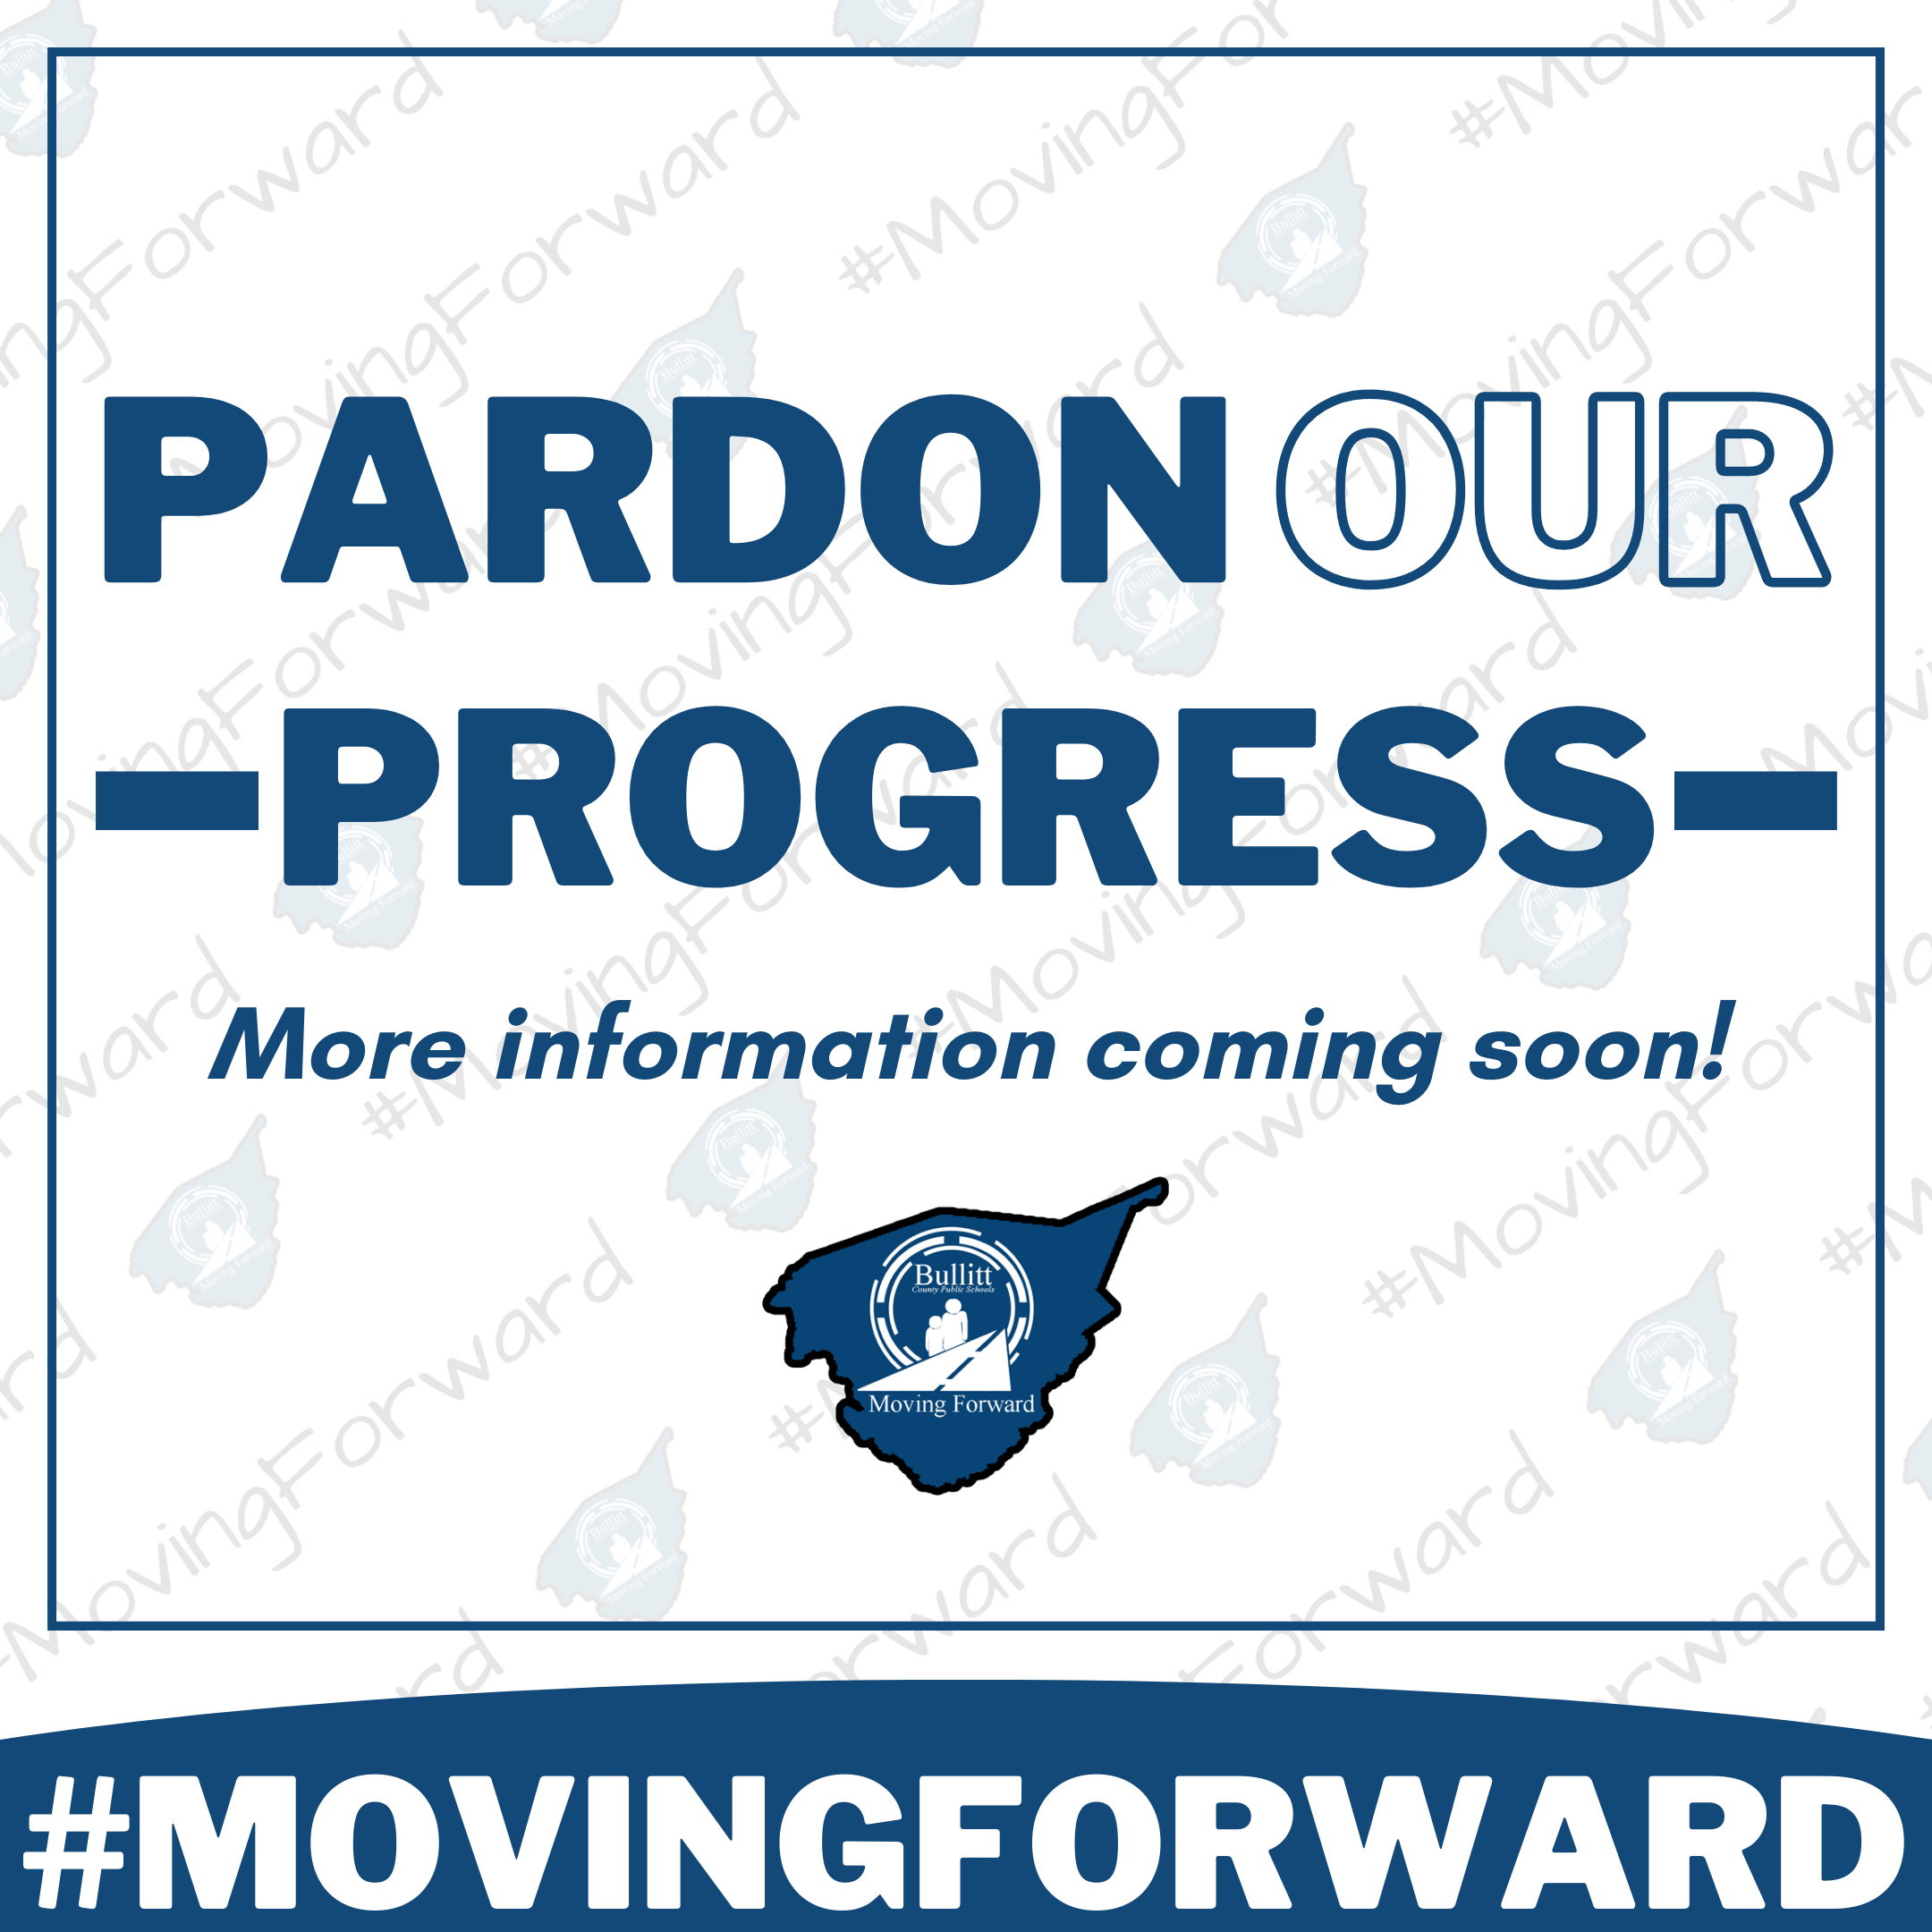 Pardon our progress - more coming soon!